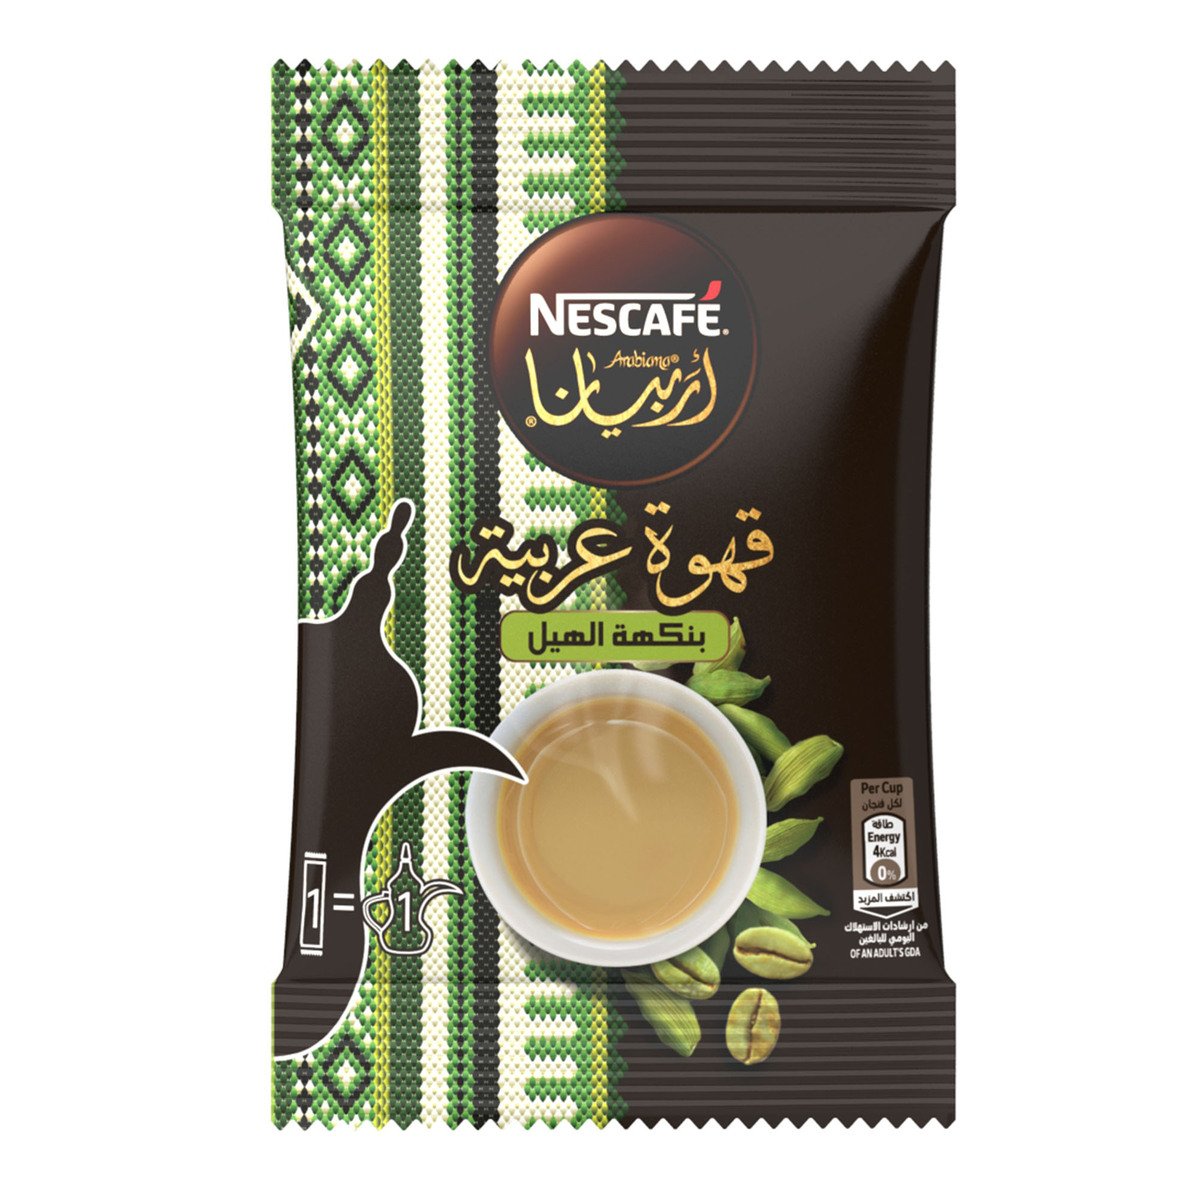 Nestle Nescafe Arabiana Cardamom 30 g